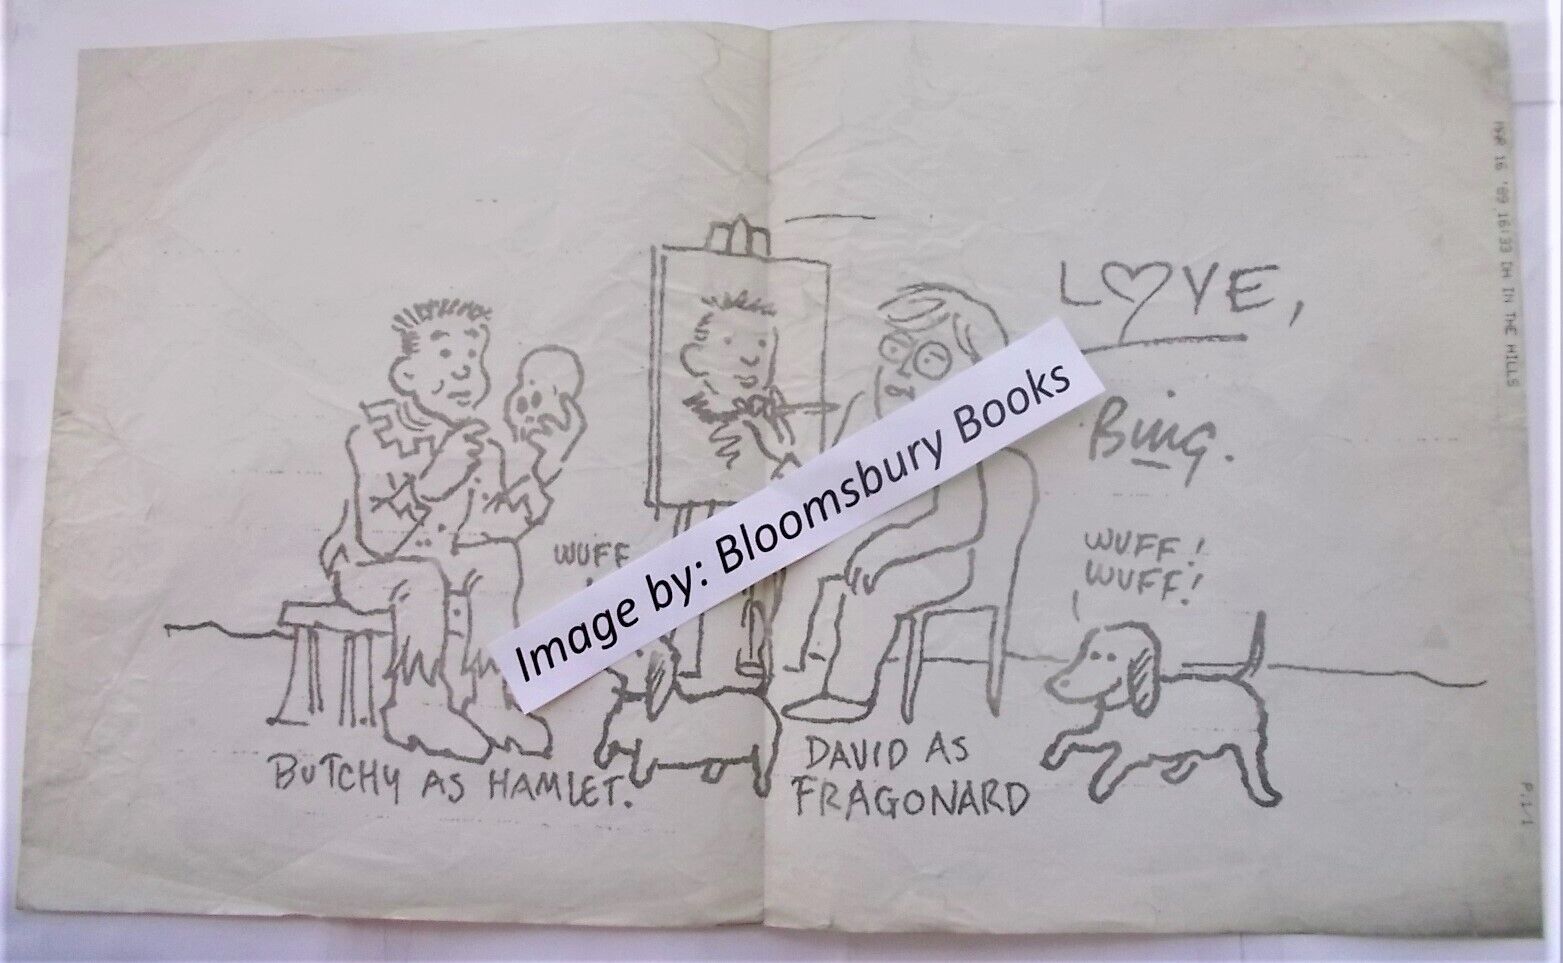 Orig Thermal Fax March 16, 1989 To David Hockney Office Bing McGilvray Artwork